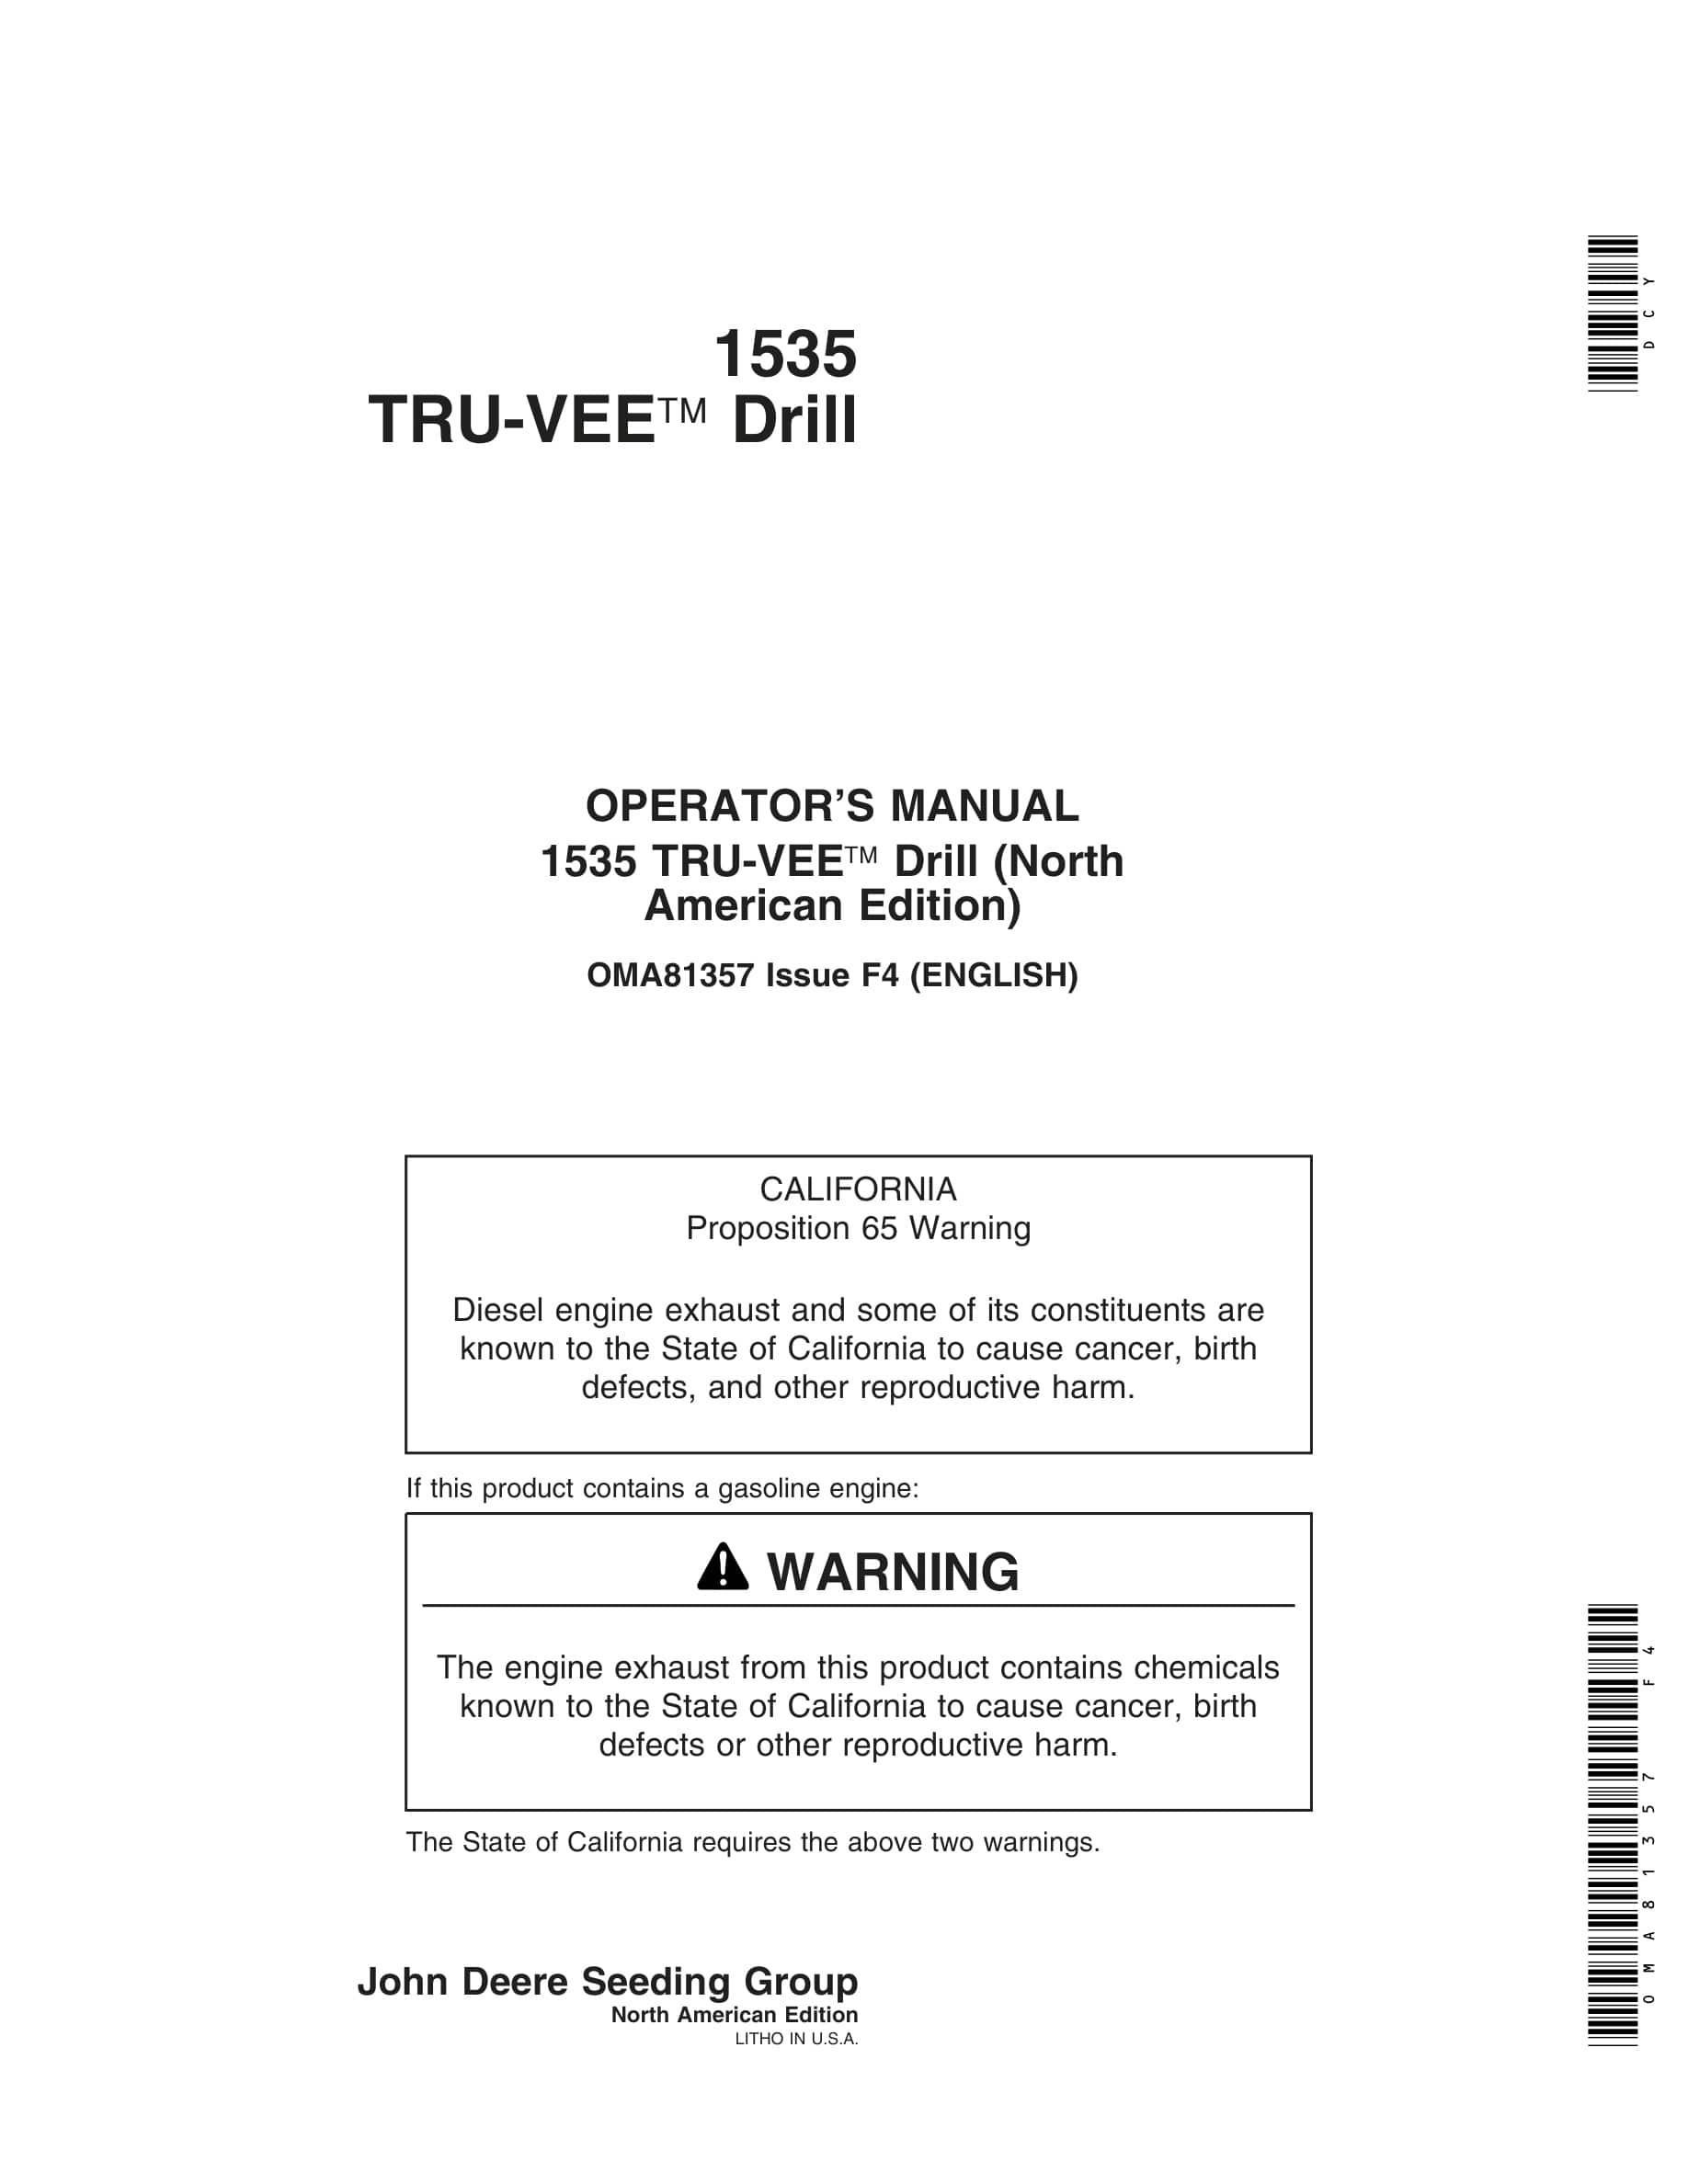 John Deere 1535 TRU-VEE Drill Operator Manual OMA81357-1